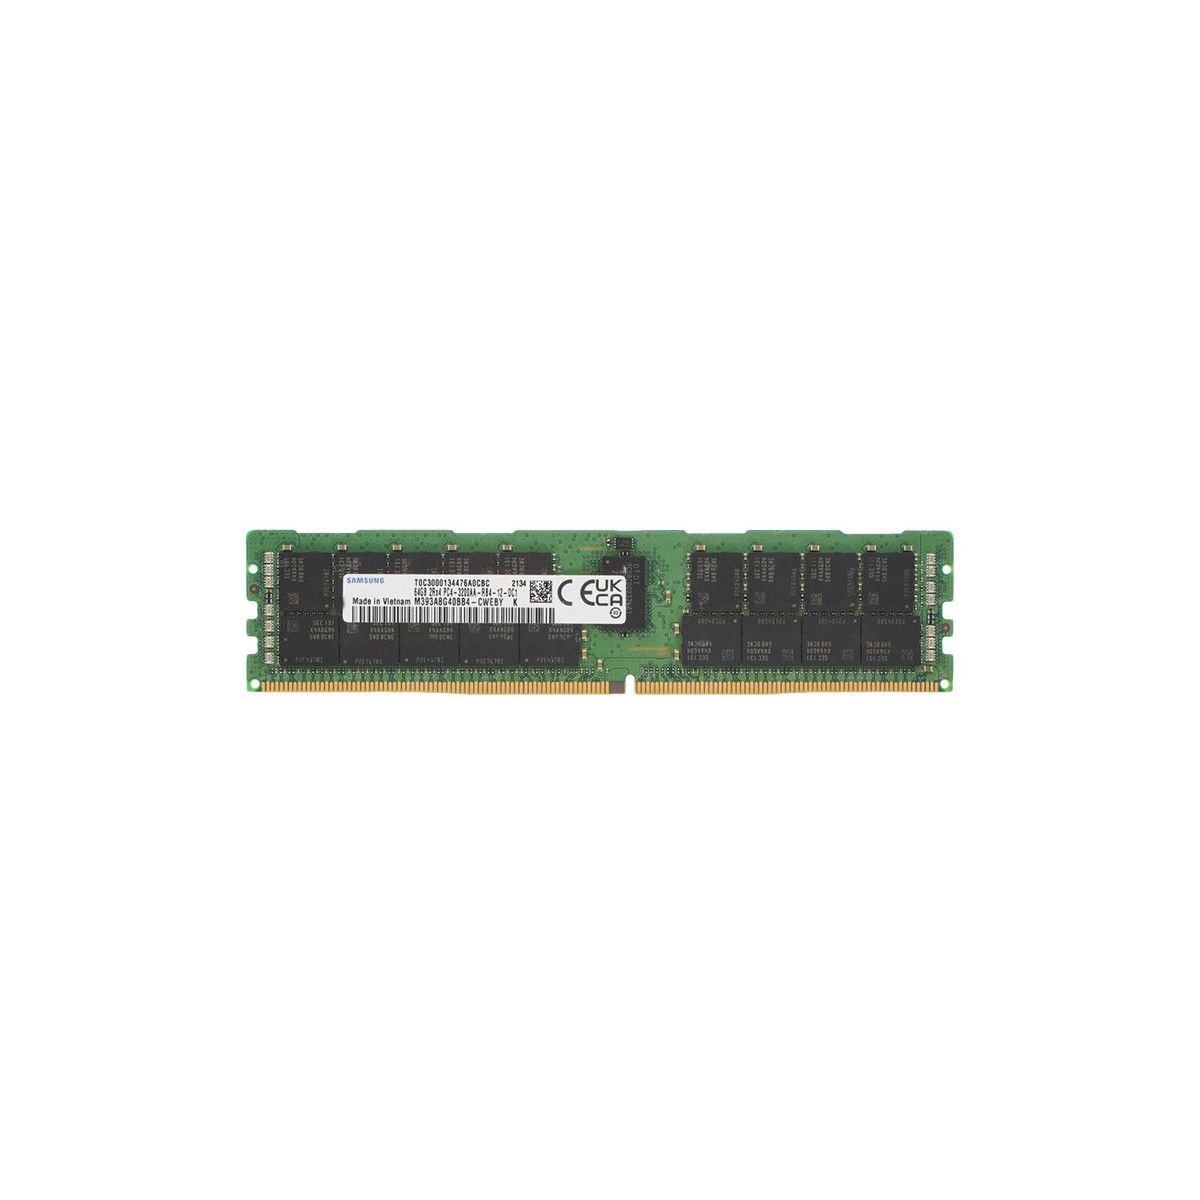 SNPP2MYXC/64G-MS - Memstar 1x 64GB DDR4-3200 RDIMM PC4-25600R - Mem-Star OEM compatibile Memoria 1 - Memstar 